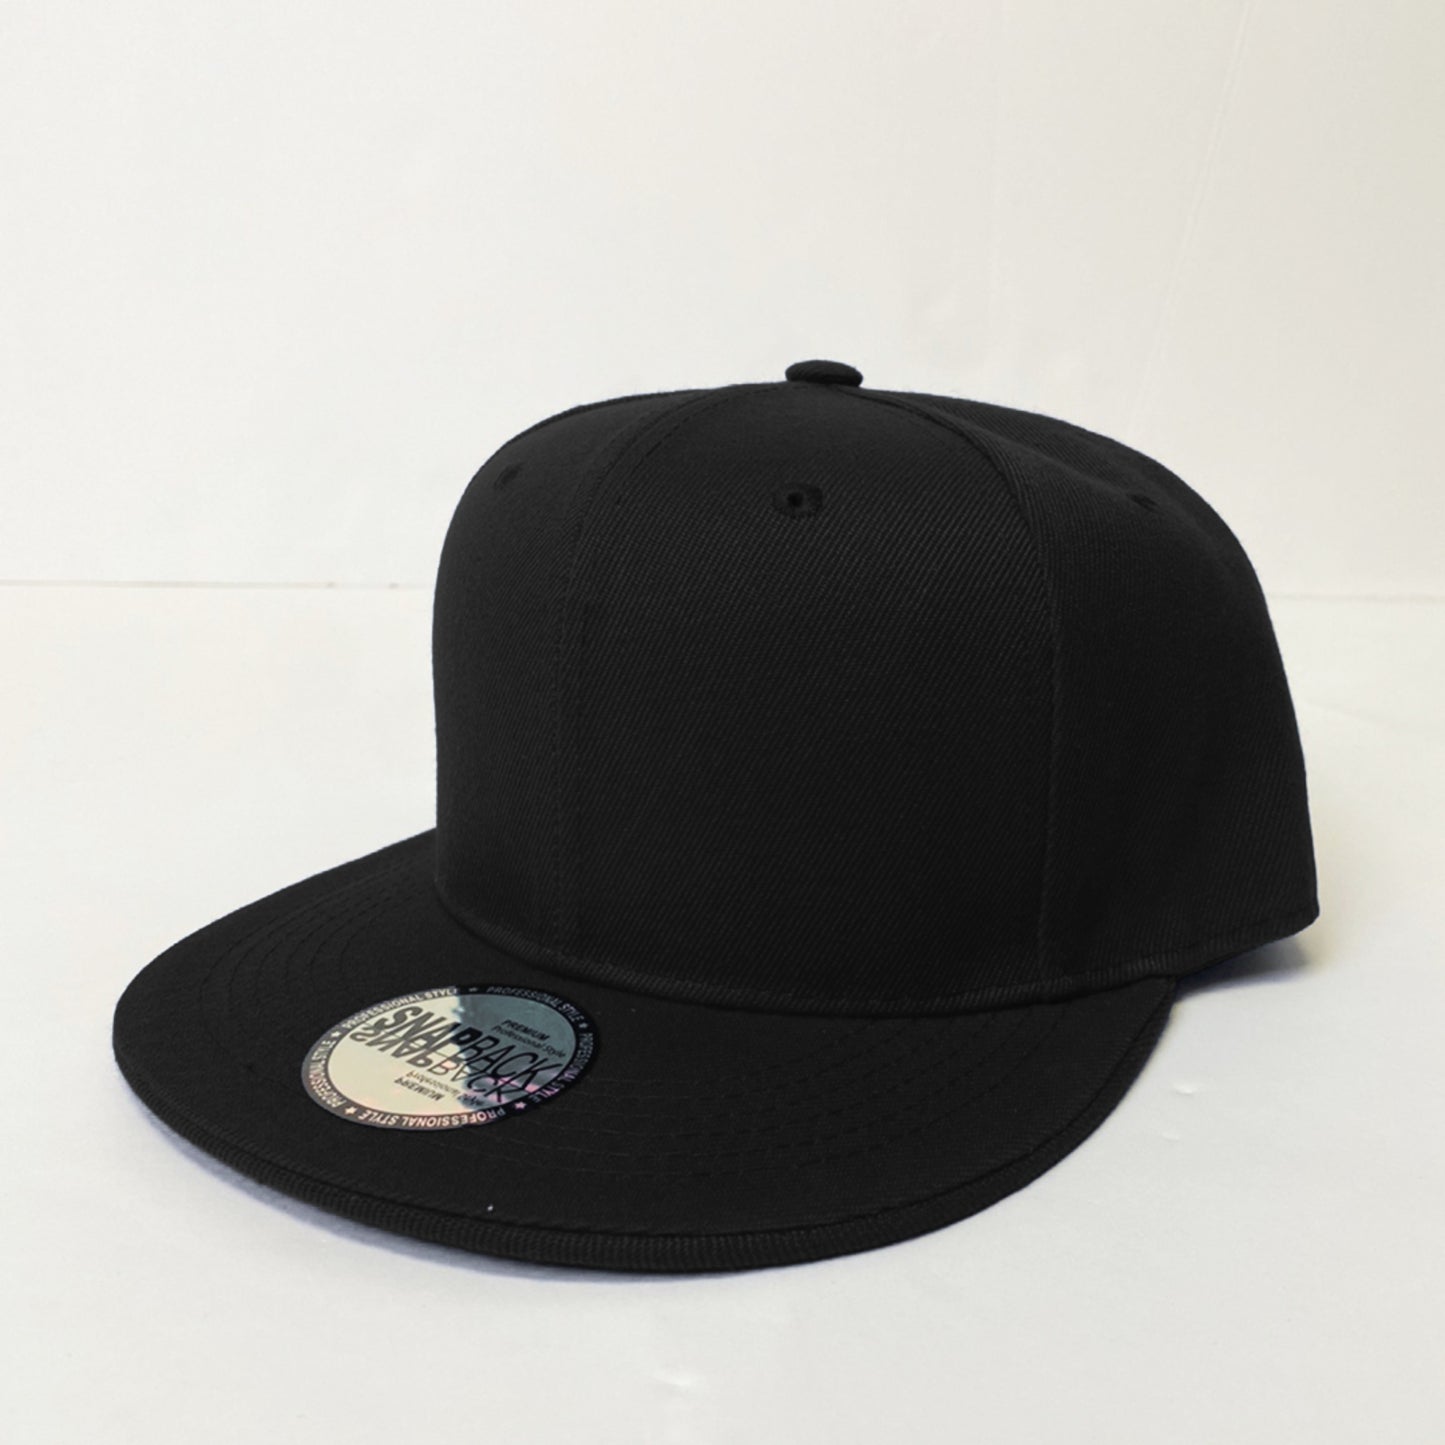 Plain Snapback 5 Panel Hat - Black